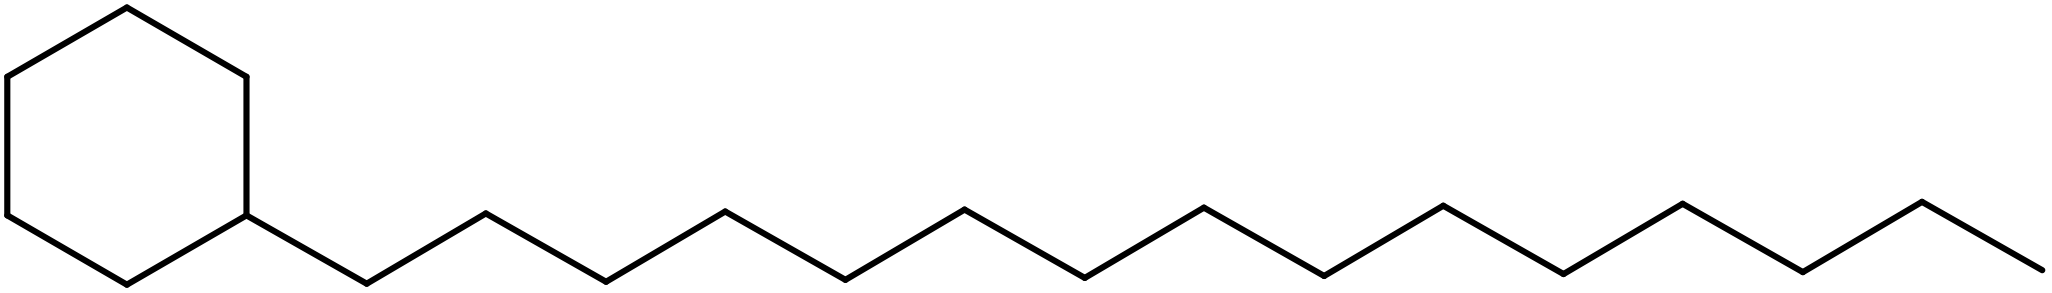 CNSL Cyclohexane is an alternate to petroleum based cyclohexane